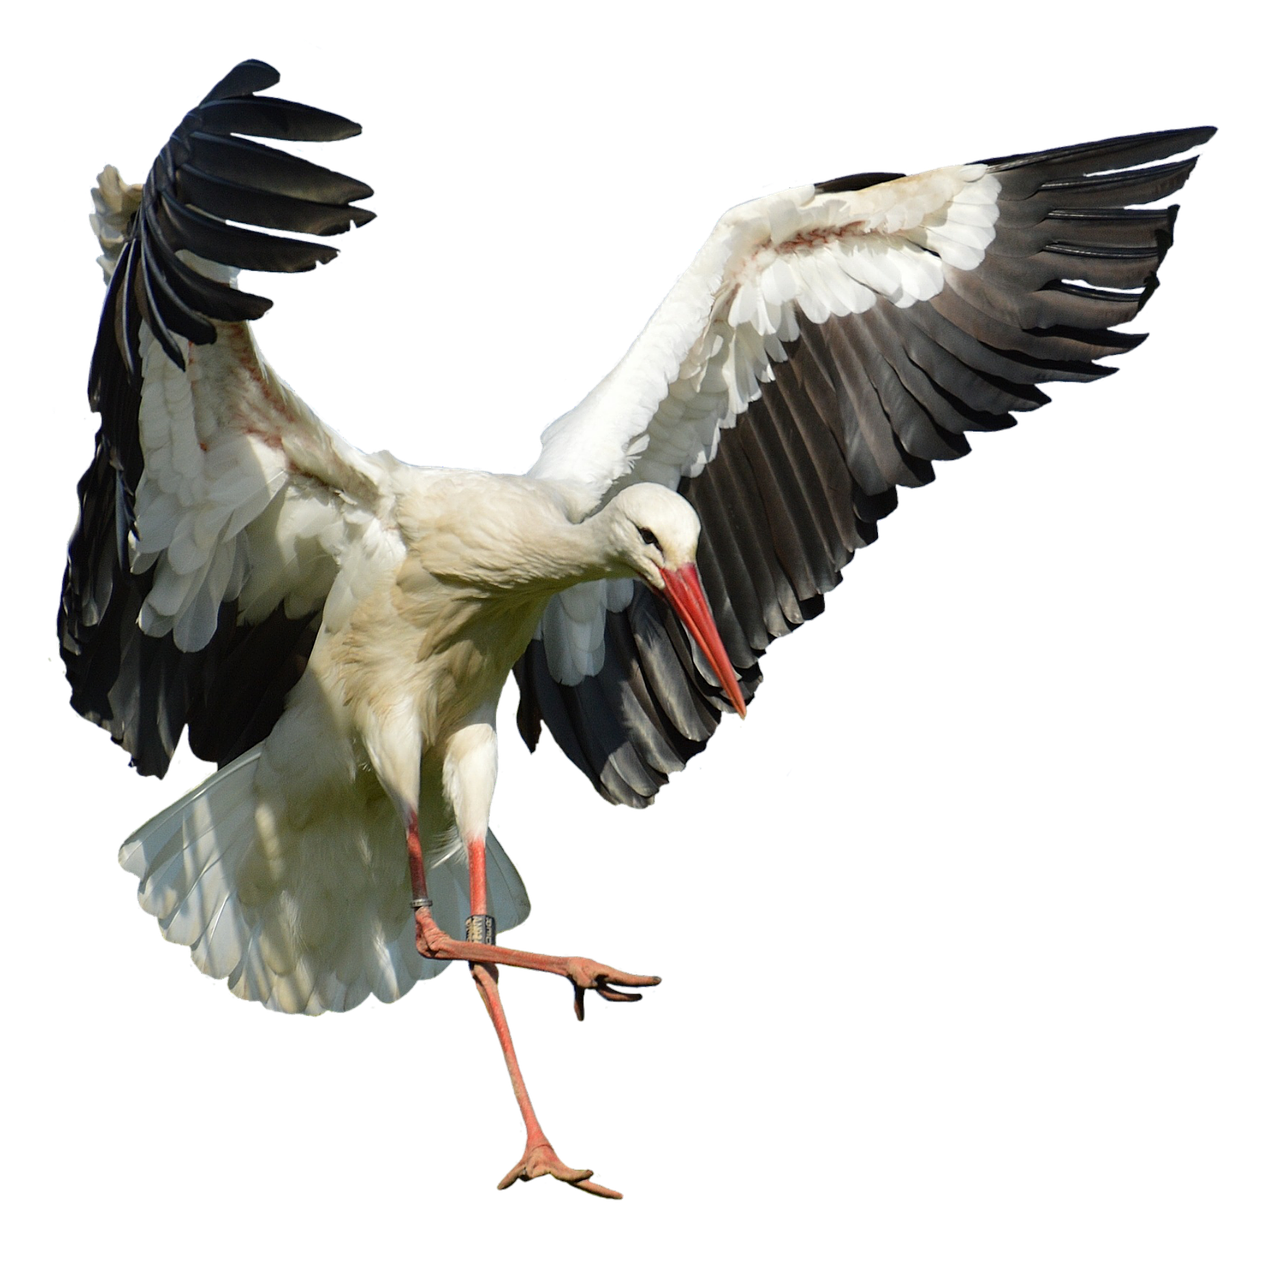 Stork,fly,landing,elegant,feather - free image from needpix.com